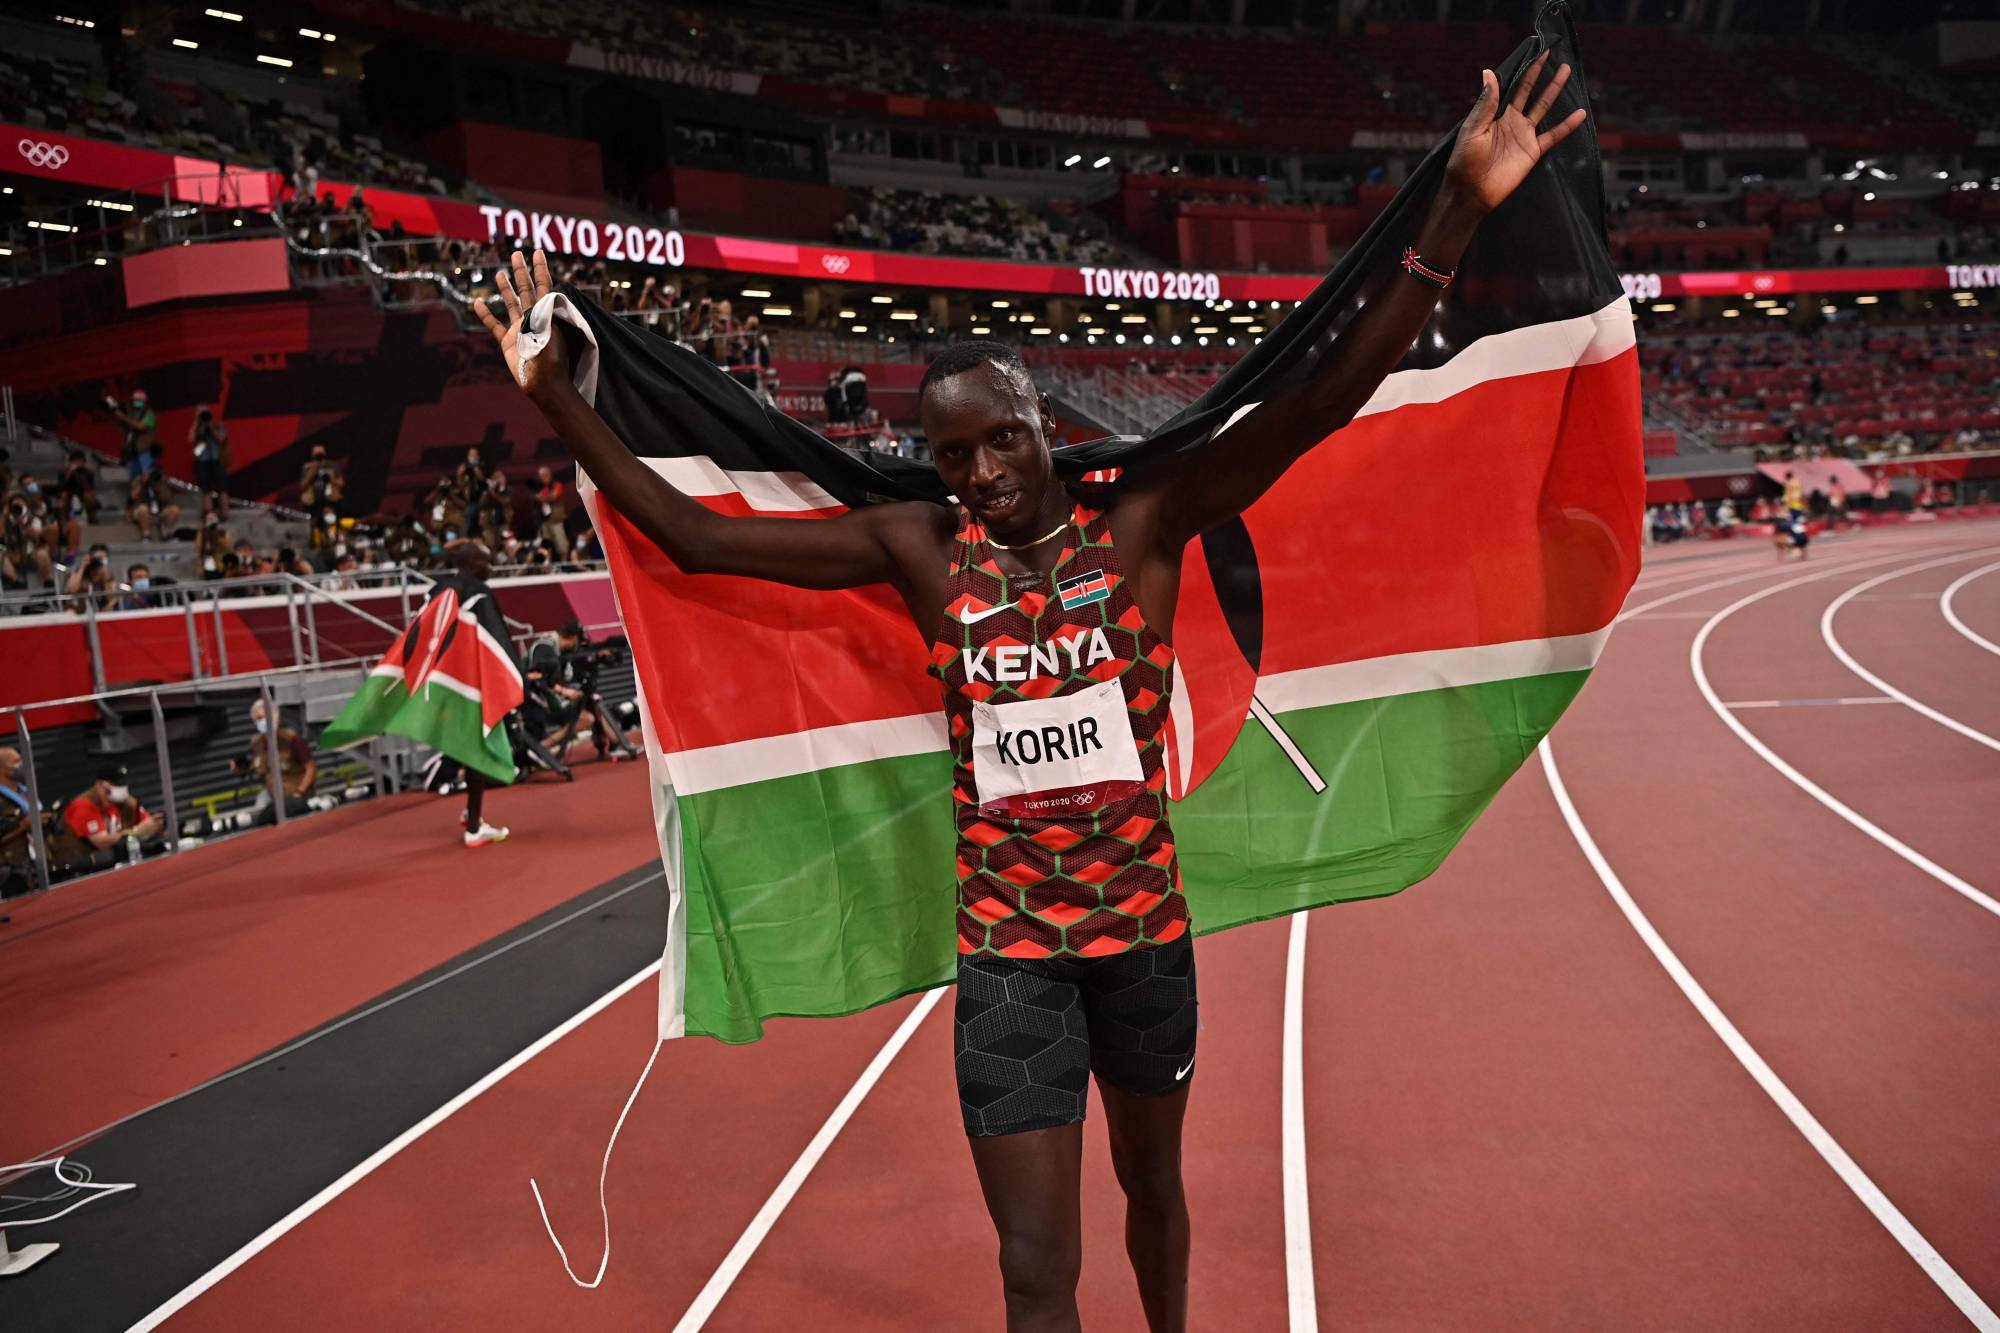 Kenya's Emmanuel Kipkurui Korir celebrates after winning the men's 800m final during the Tokyo 2020 Olympic Games at the Olympic Stadium in Tokyo on August 4, 2021. (Photo by Ben STANSALL / POOL / AFP)